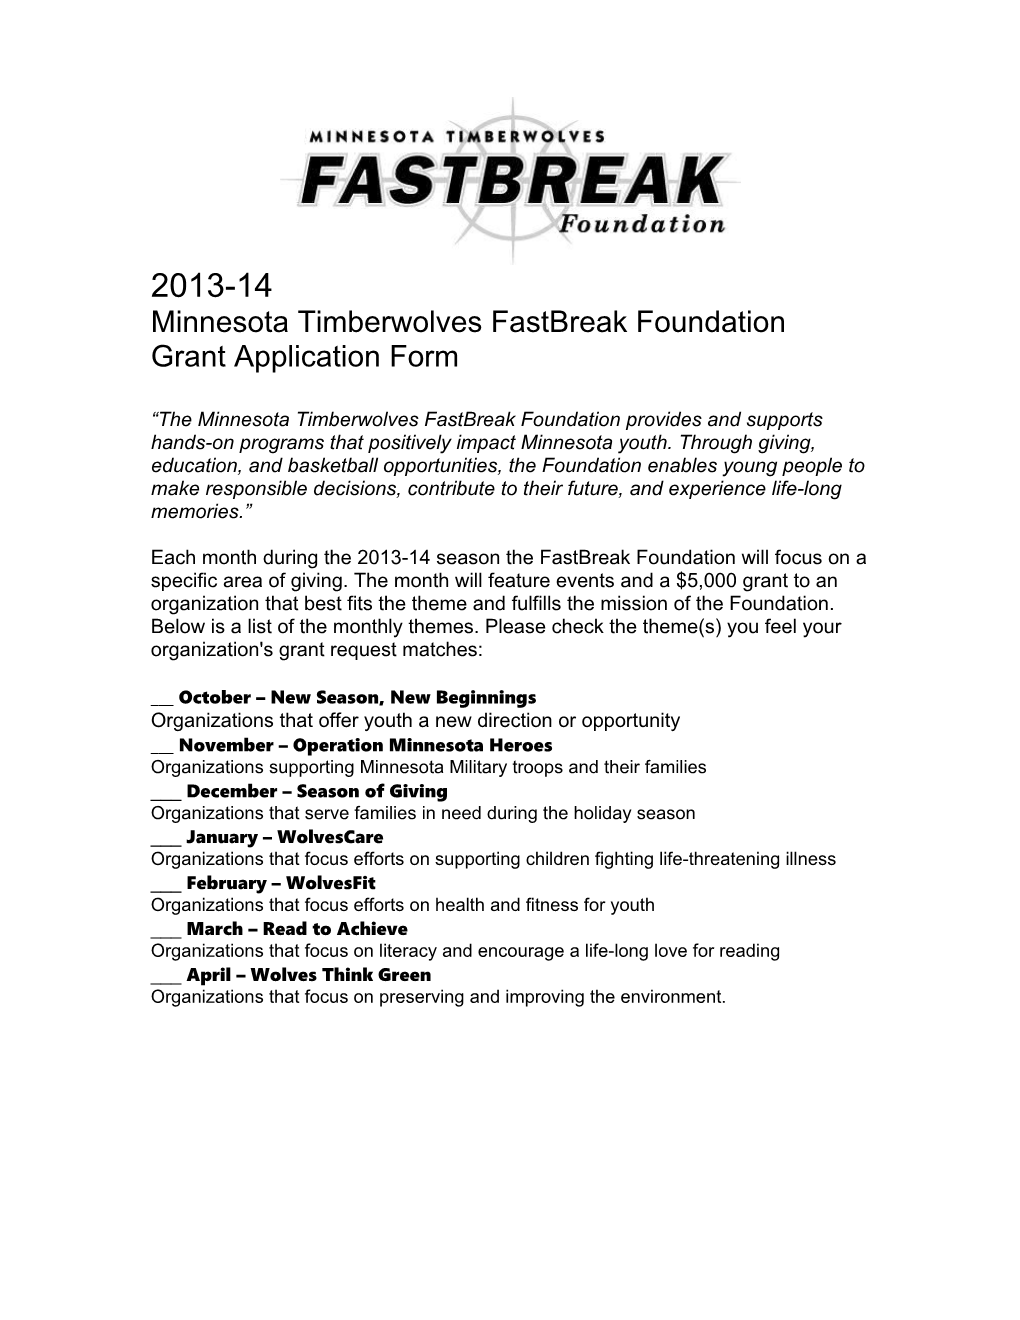 Minnesota Timberwolves Fastbreak Foundation